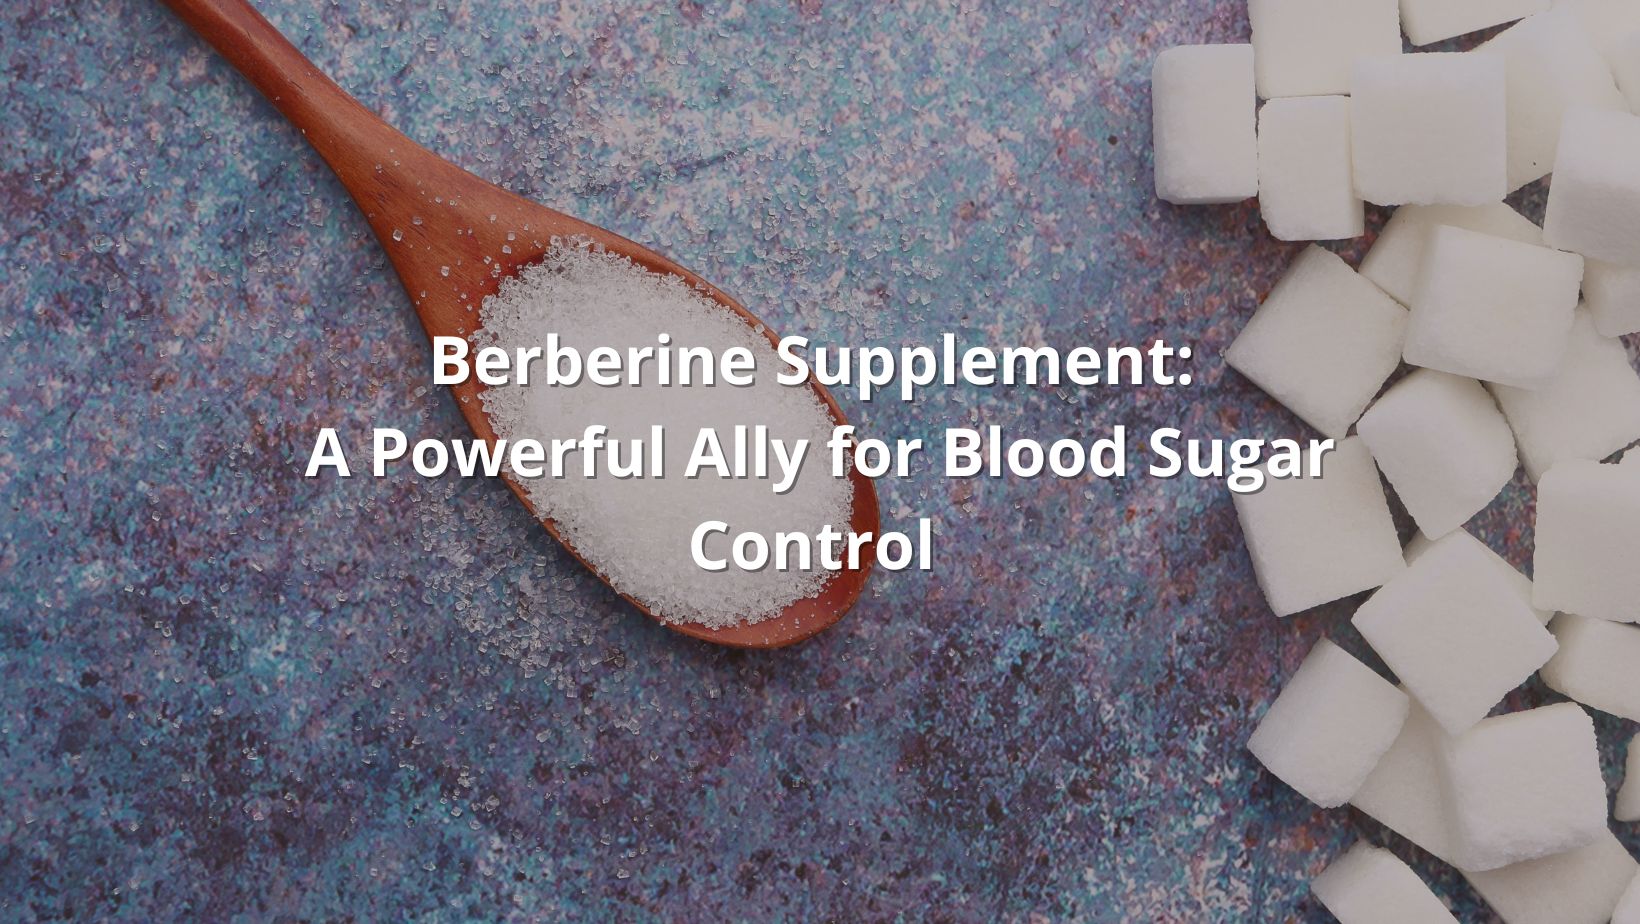 Berberine supplement featured image